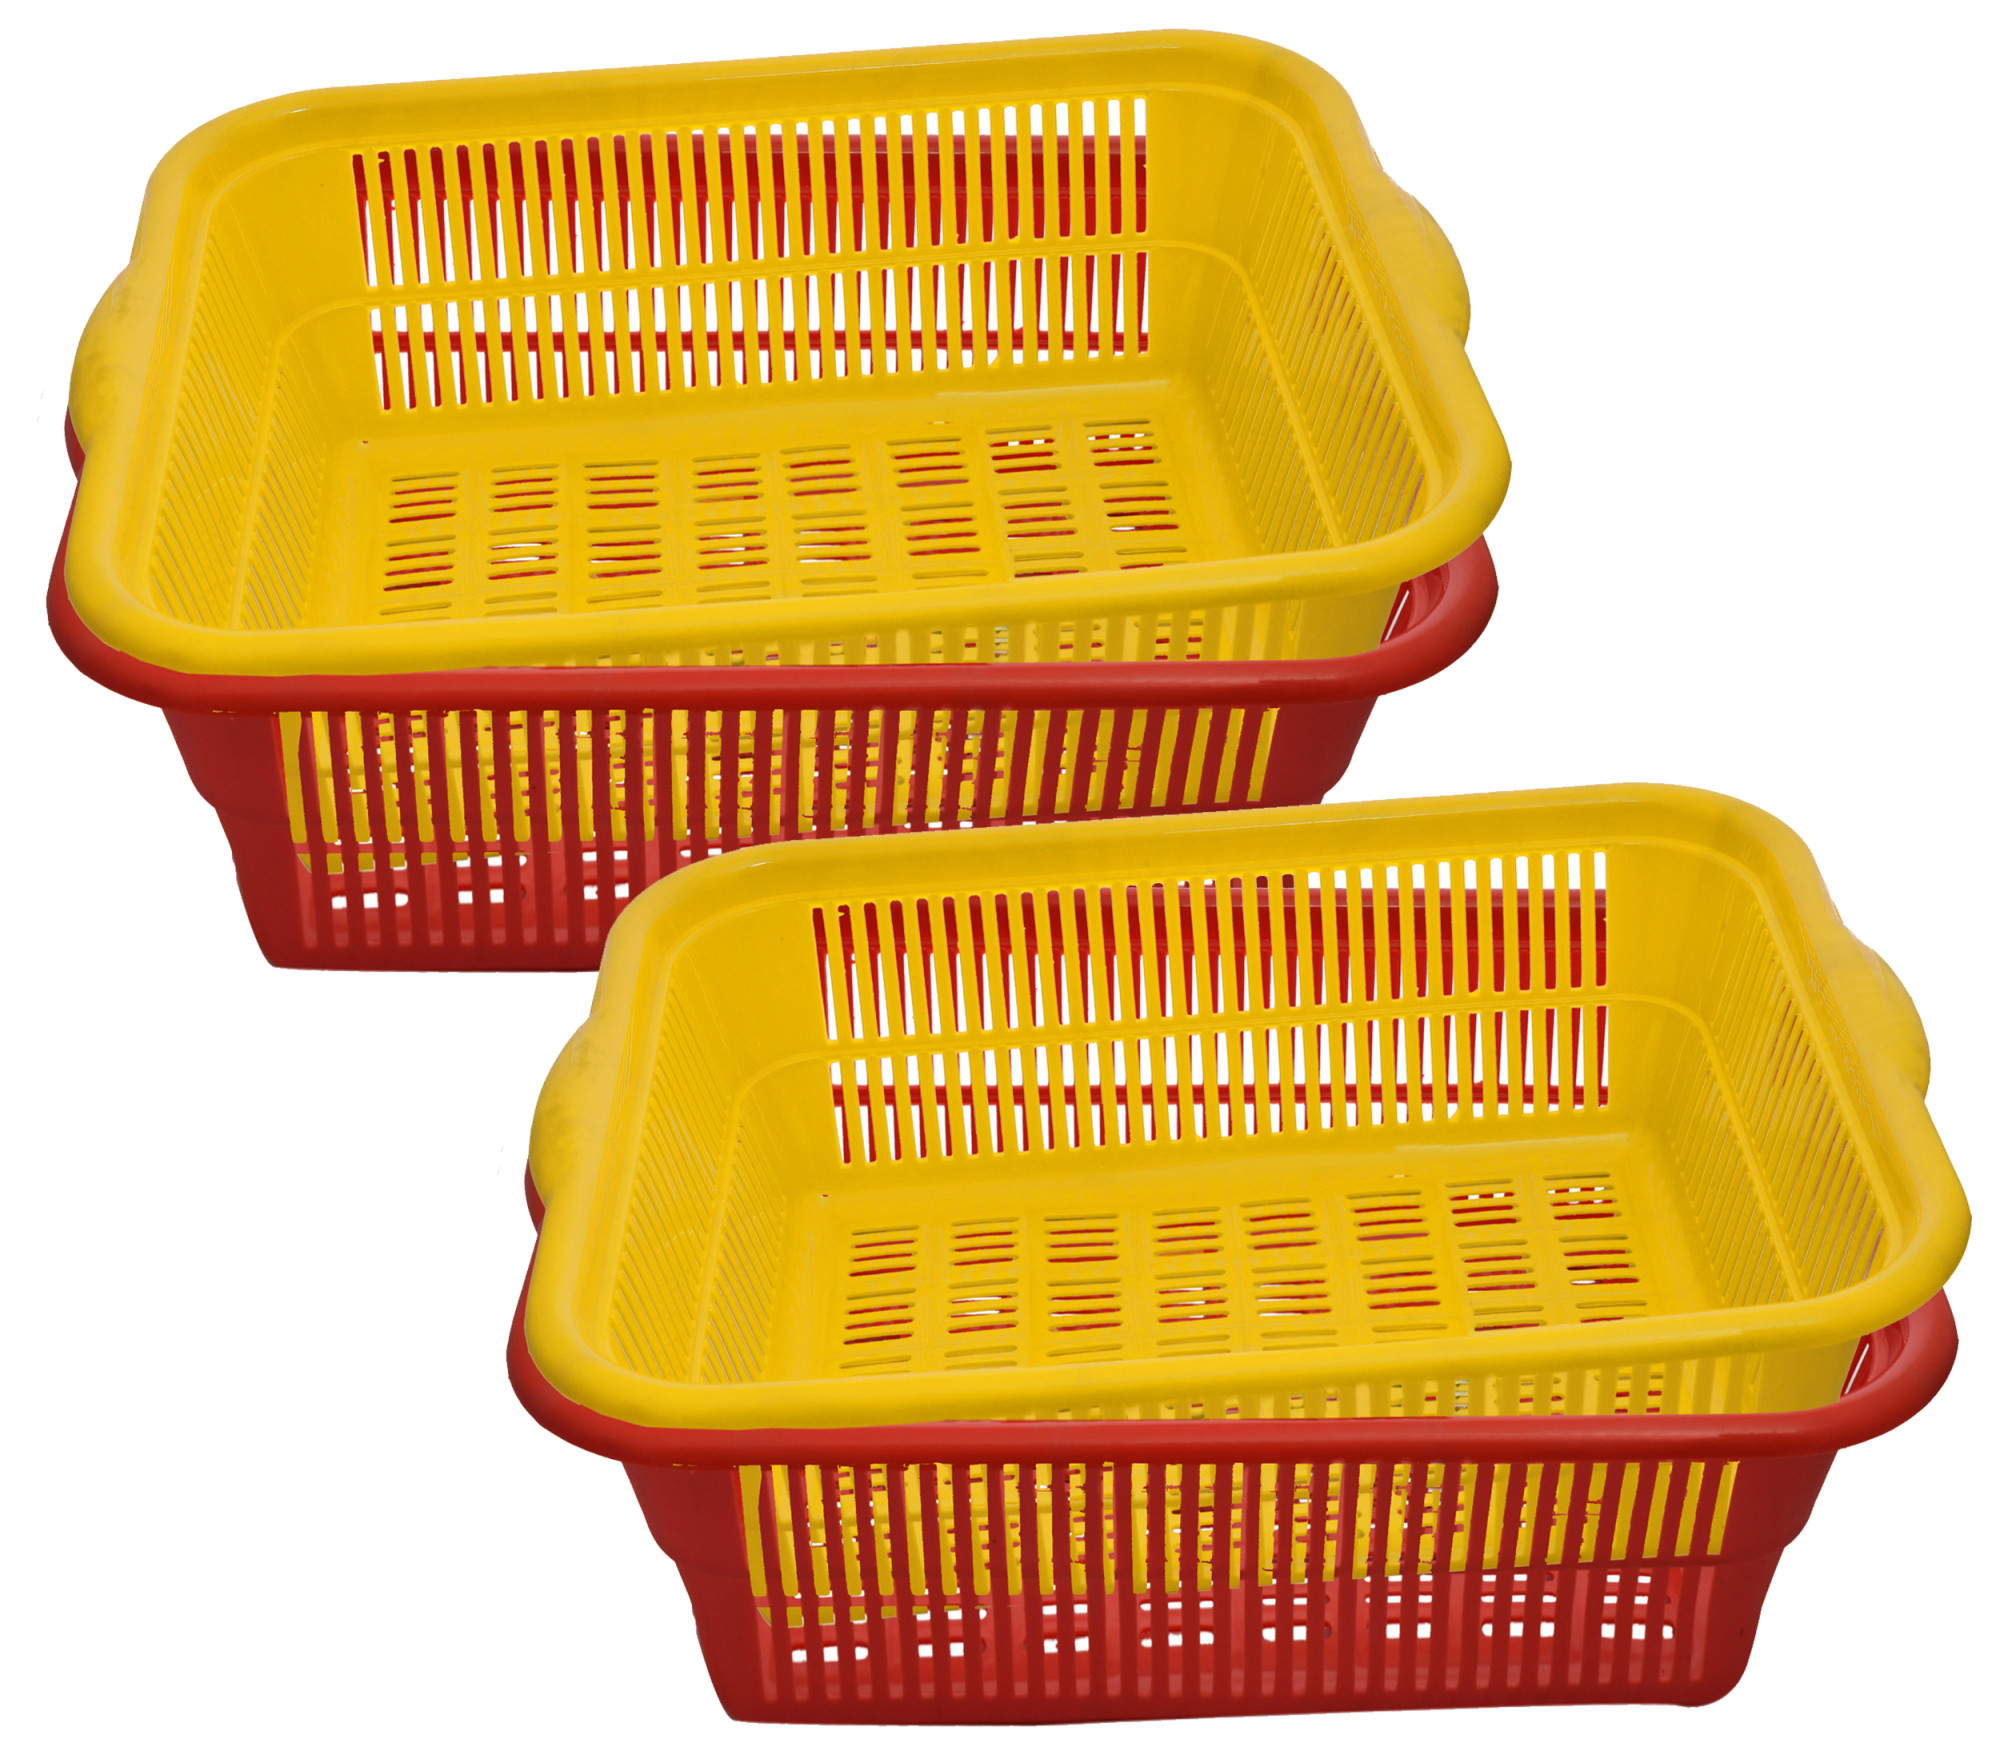 Kuber Industries Plastic Kitchen Medium Size Dish Rack Drainer Vegetables And Fruits Washing Basket Dish Rack Multipurpose Organizers (Red & Yellow)-KUBMART718